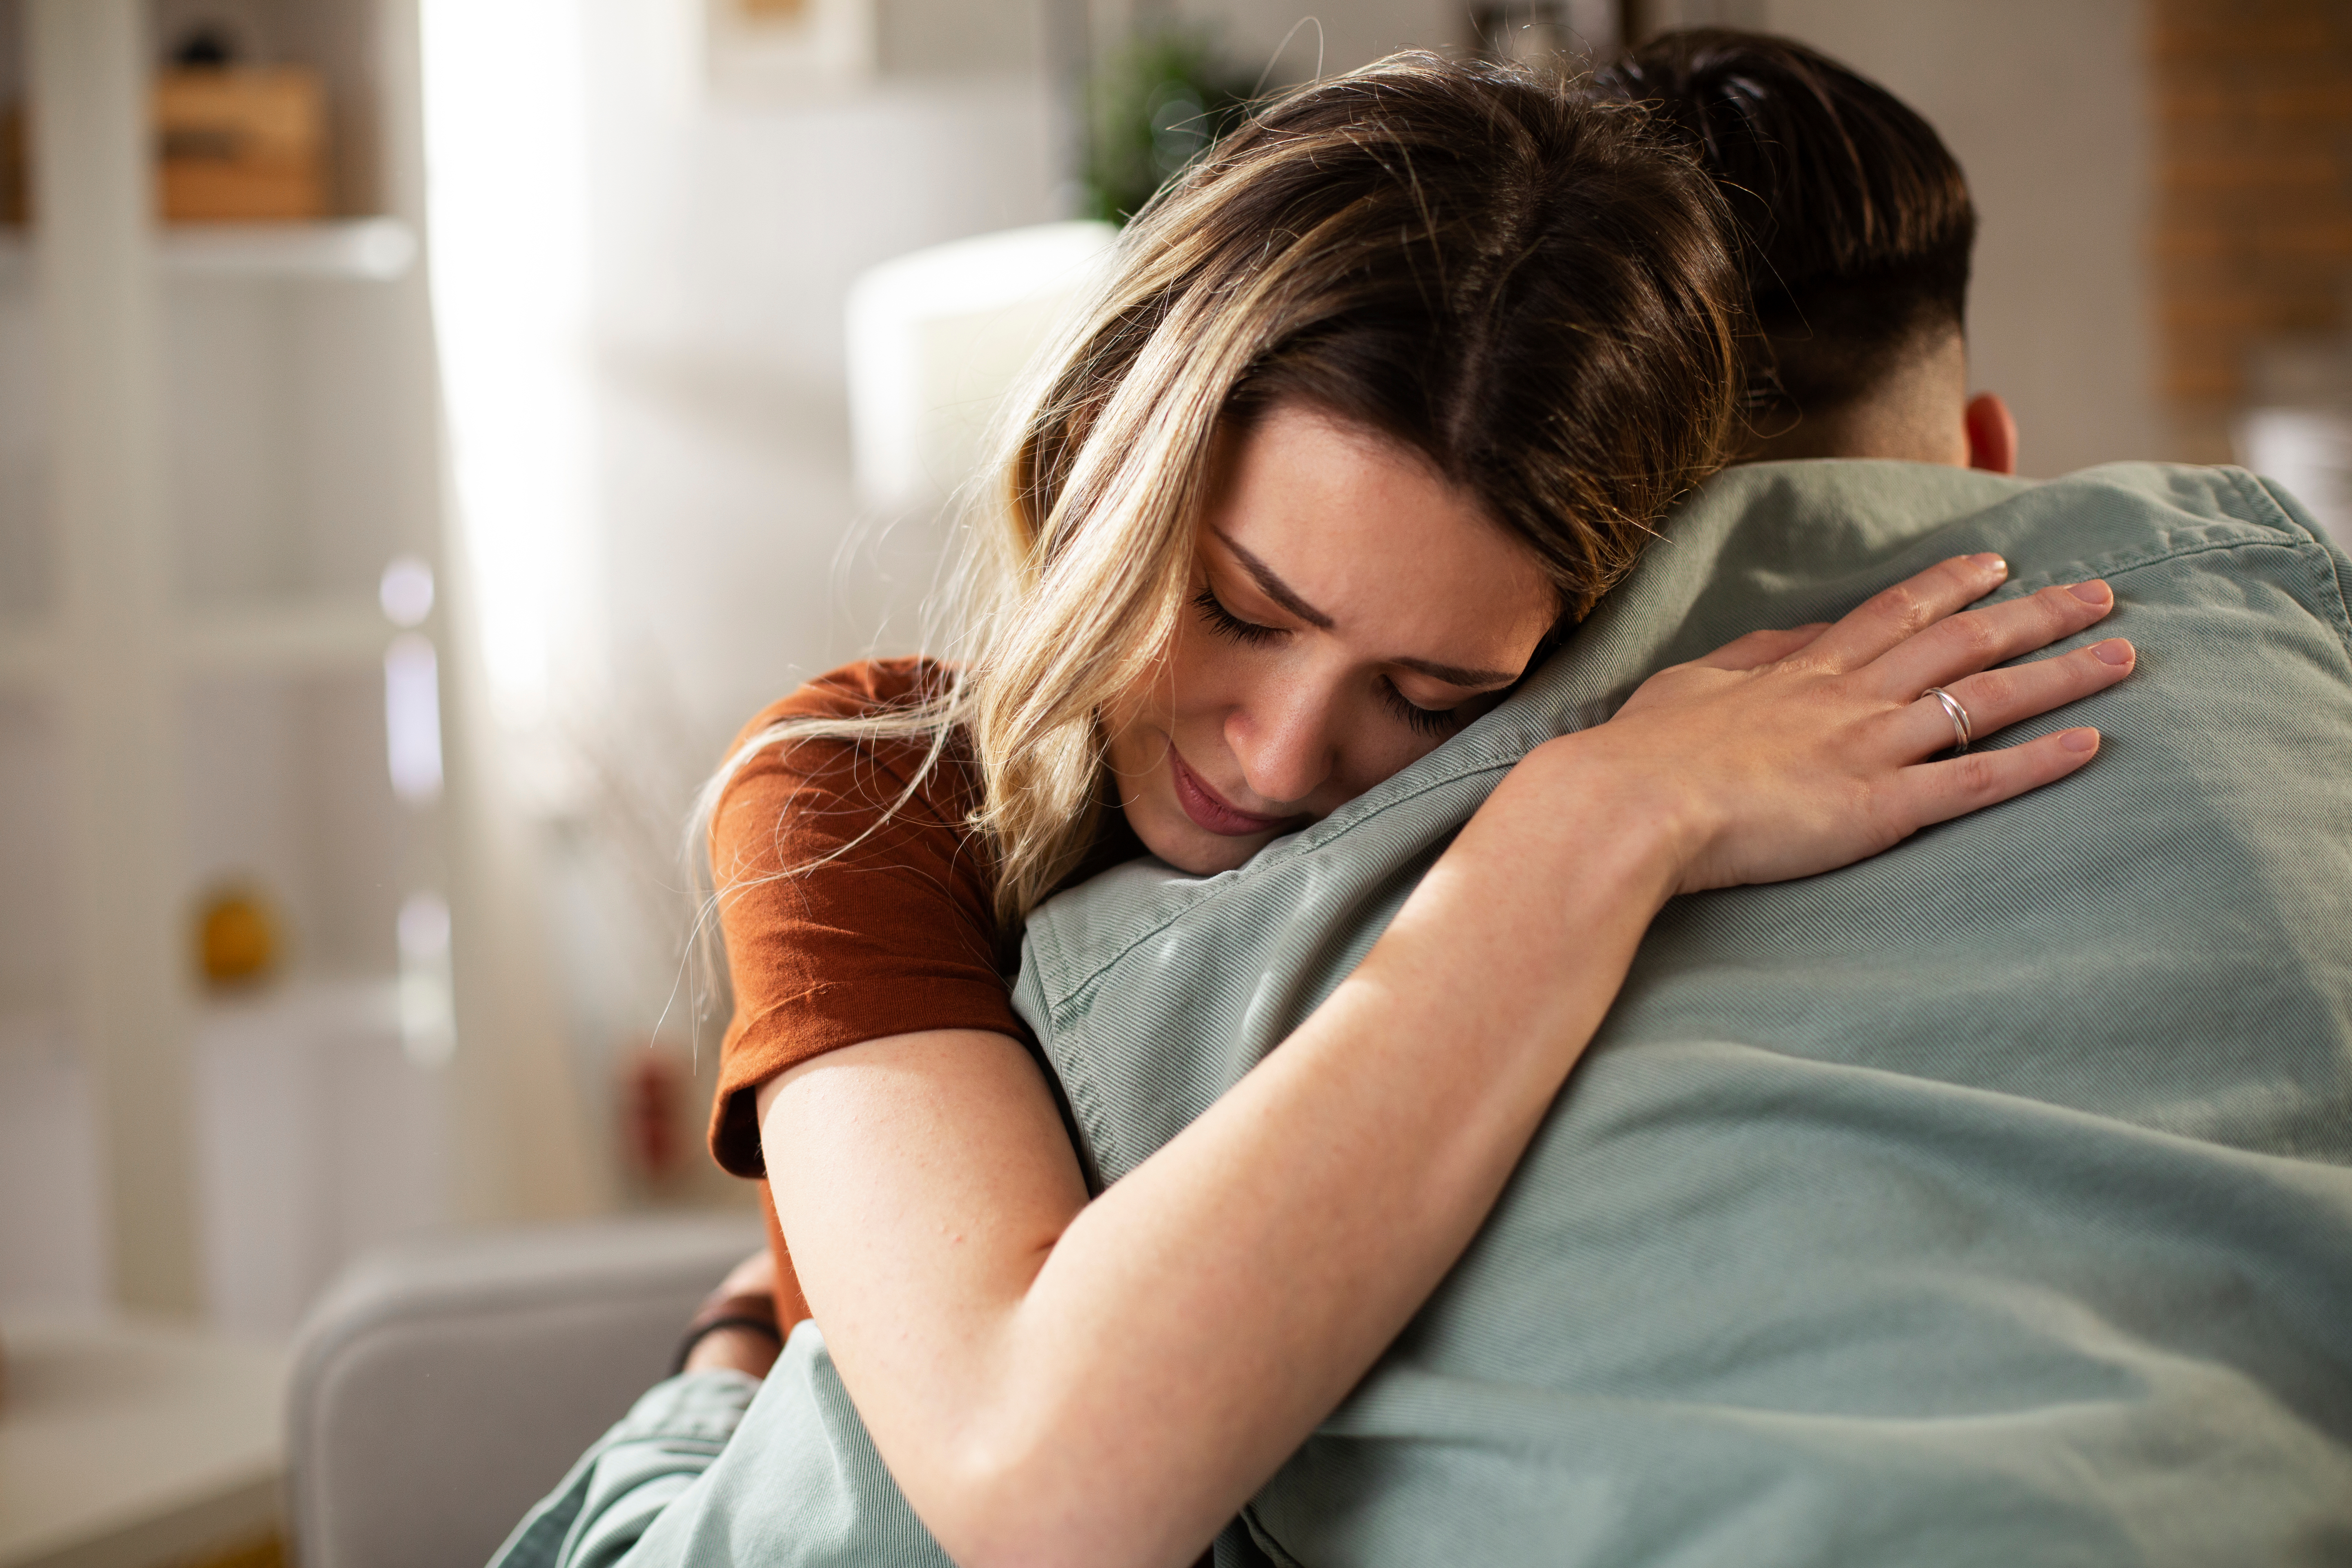 Man comforting woman. | Source: Shutterstock